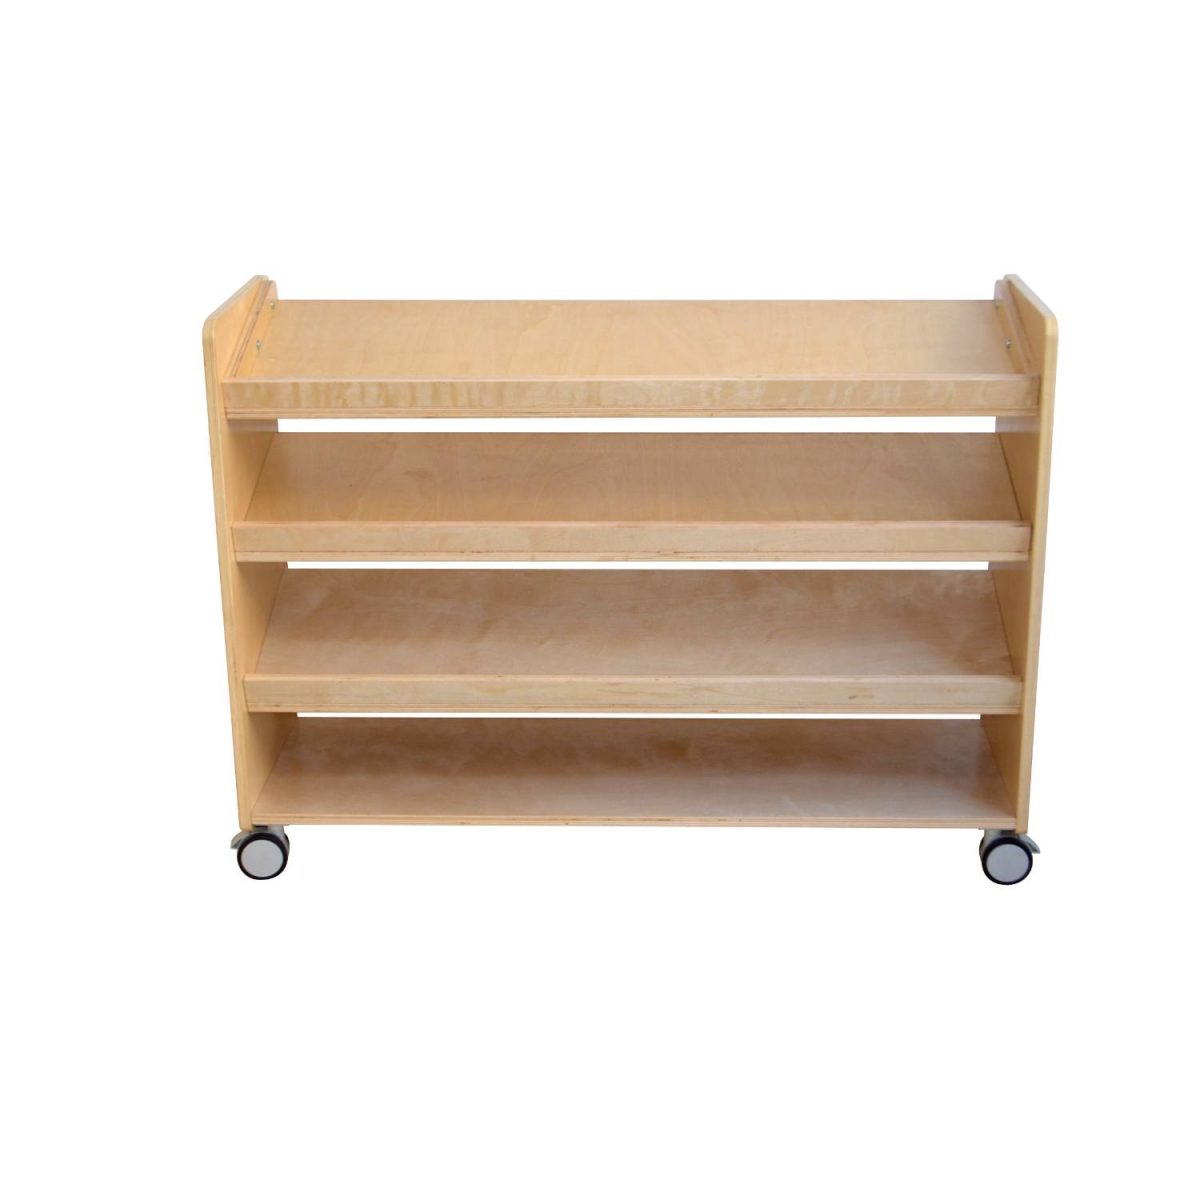 Birchwood Standard Puzzle/Book Shelf Unit Classic